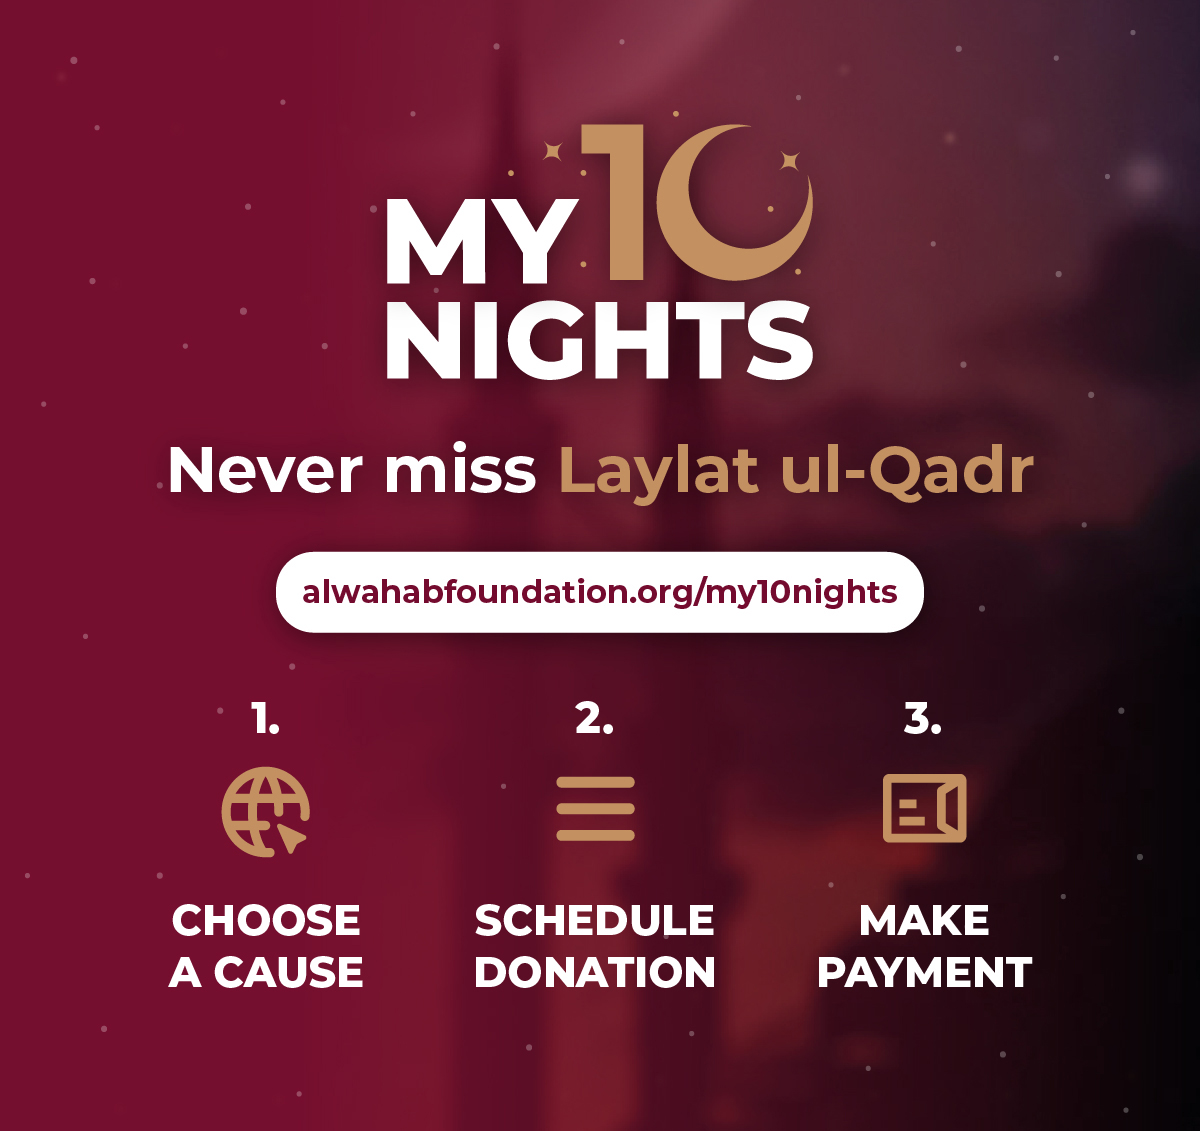 My 10 Nights - Never Miss Laylat ul-Qadr